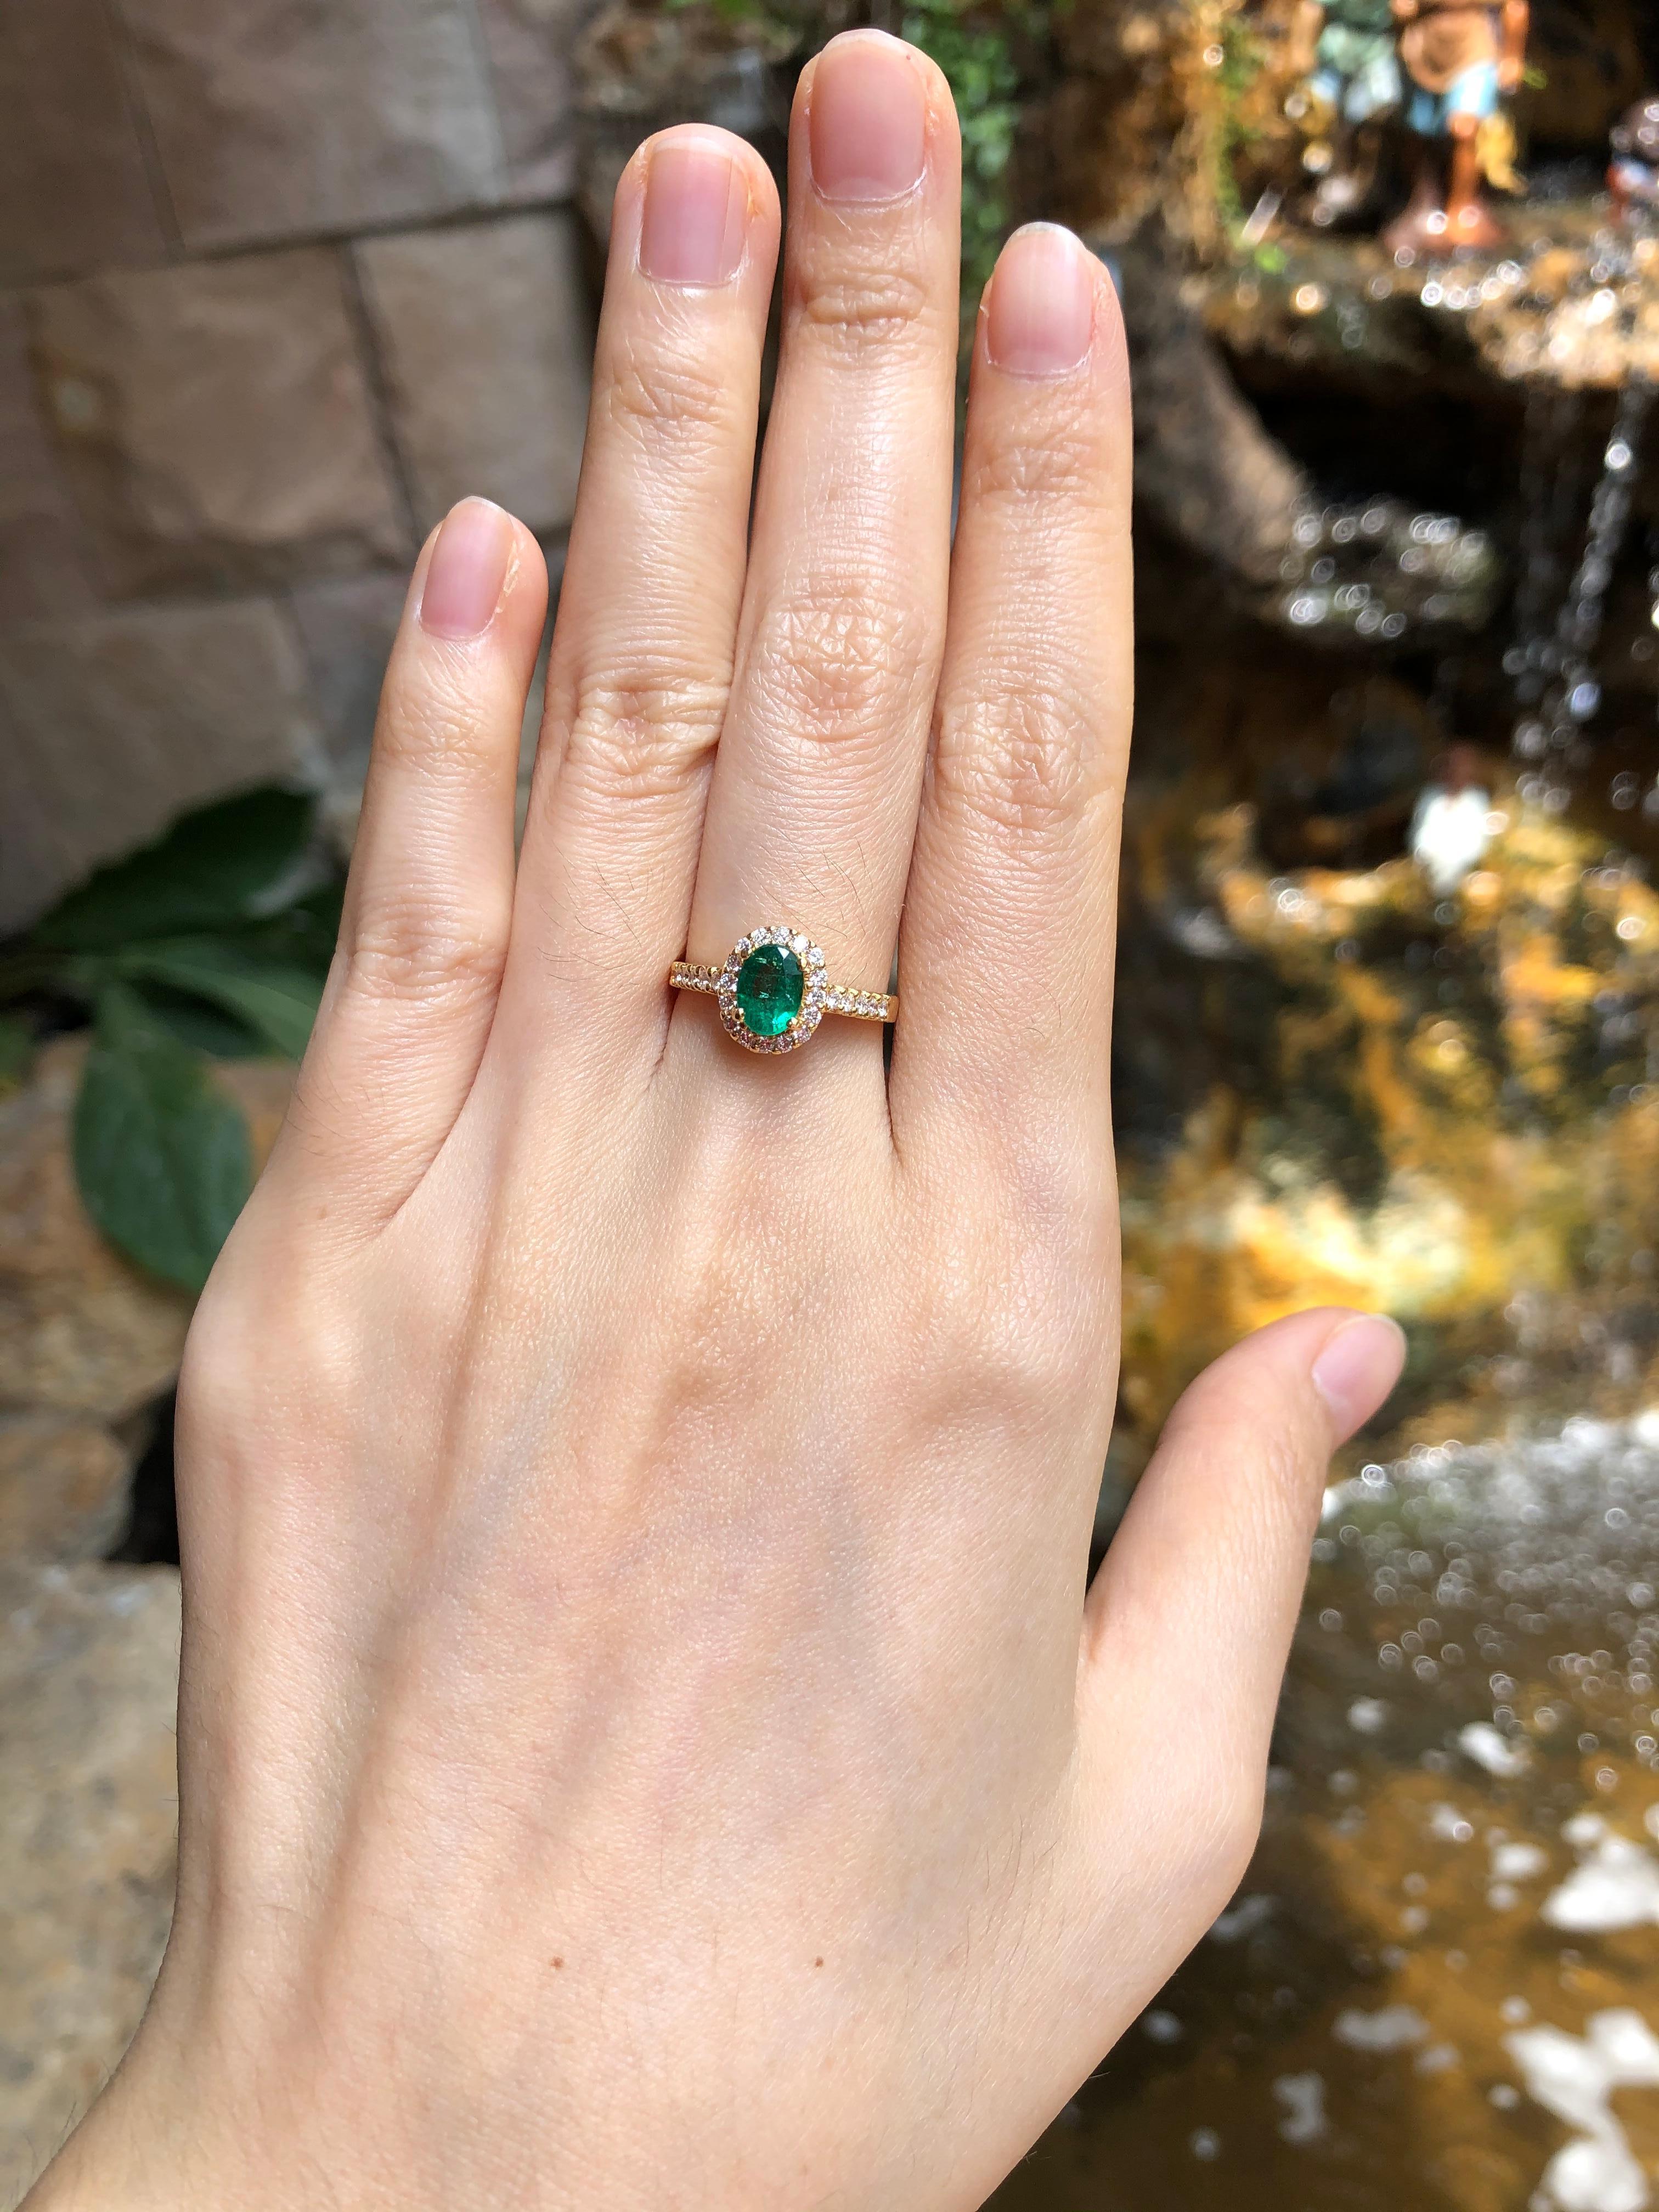 Emerald 0.76 carat with Diamond 0.32 carat Ring set in 18 Karat Gold Settings

Width:  0.8 cm 
Length: 1.0 cm
Ring Size: 52
Total Weight: 3.49 grams

